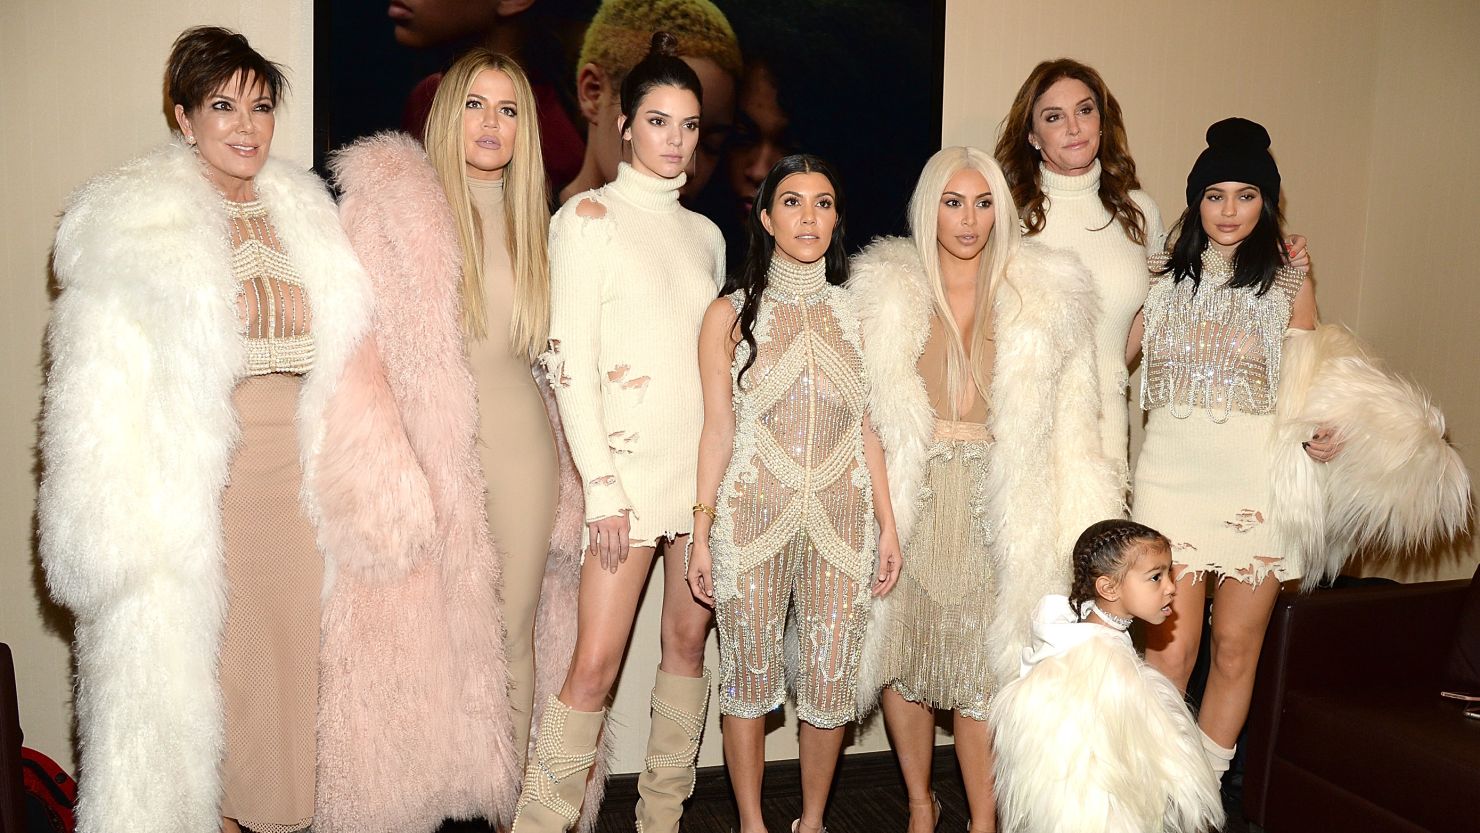 Khloe Kardashian, Kris Jenner, Kendall Jenner, Kourtney Kardashian, Kim Kardashian West, North West, Caitlyn Jenner and Kylie Jenner attend Kanye West Yeezy Season 3 at Madison Square Garden in 2016.